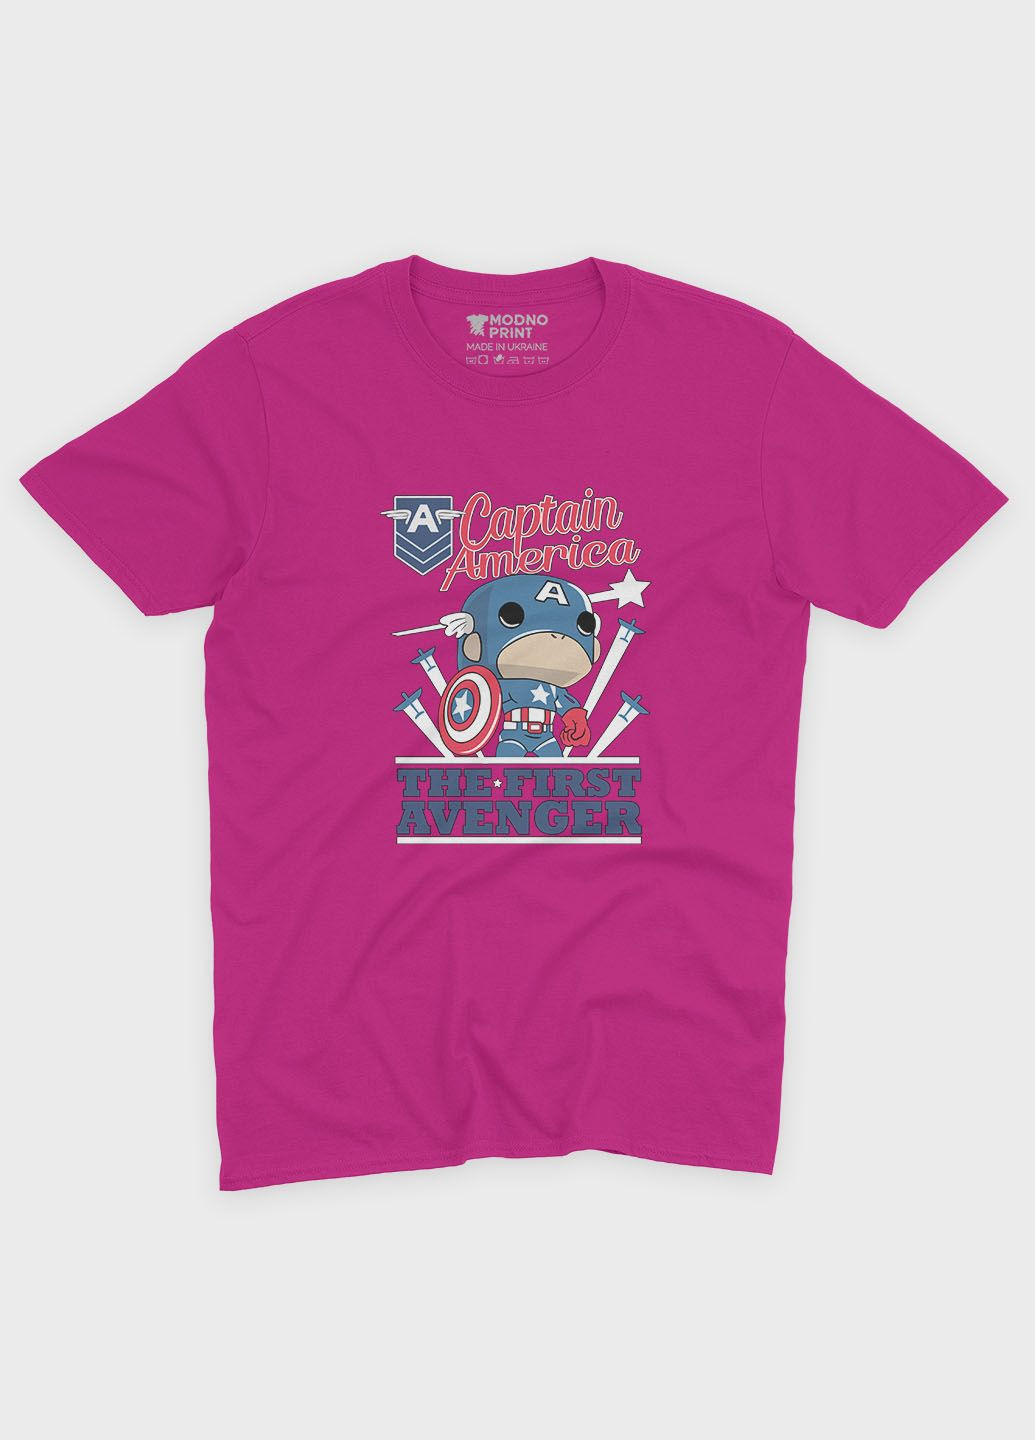 Розовая демисезонная футболка для мальчика с принтом супергероя - капитан америка (ts001-1-fuxj-006-022-004-b) Modno